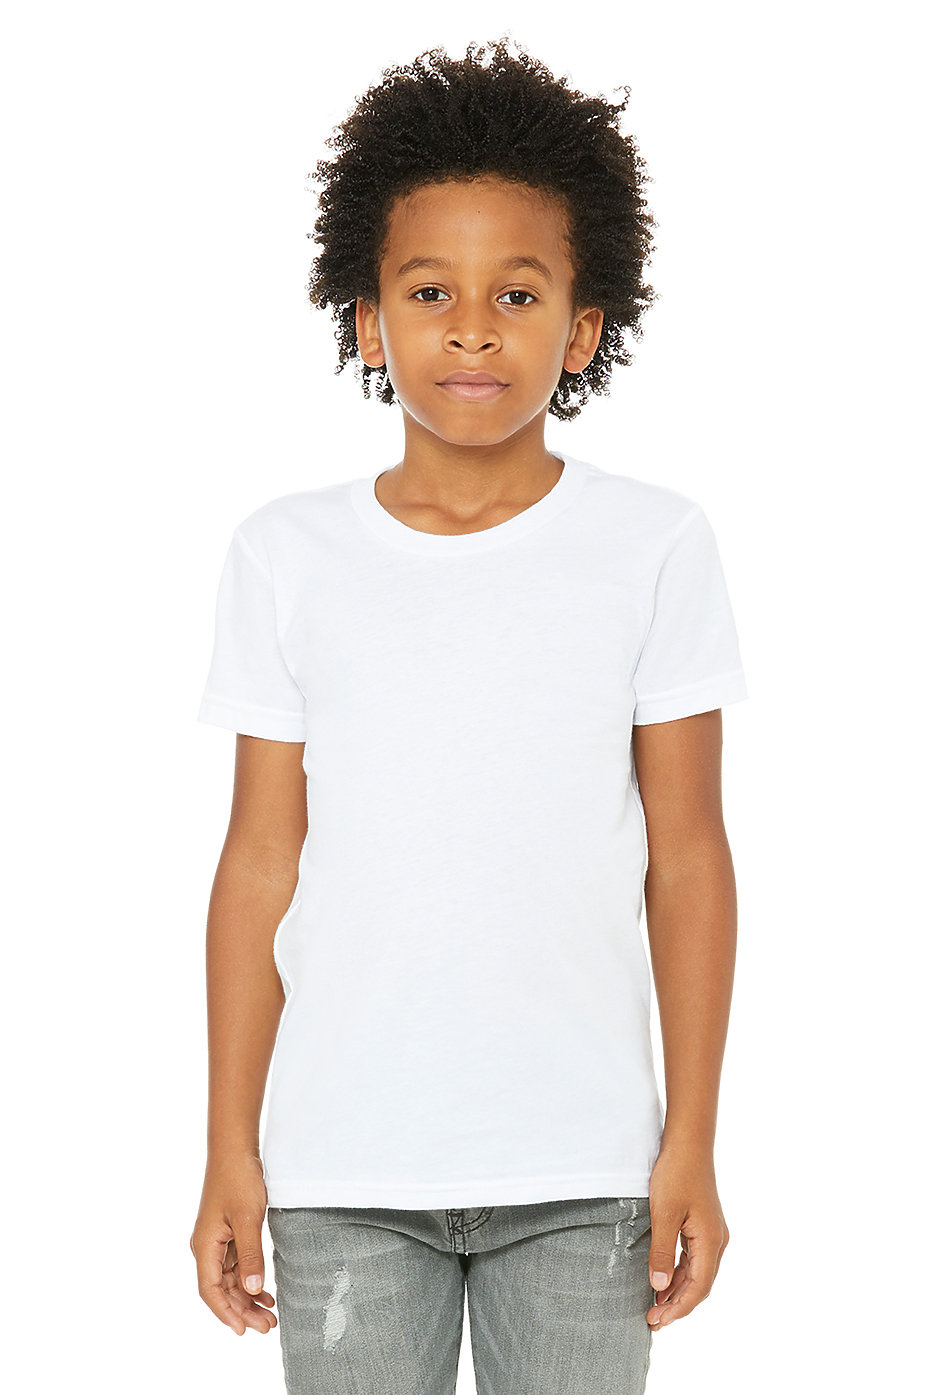 Kids Tee Shirts | BELLA+CANVAS 